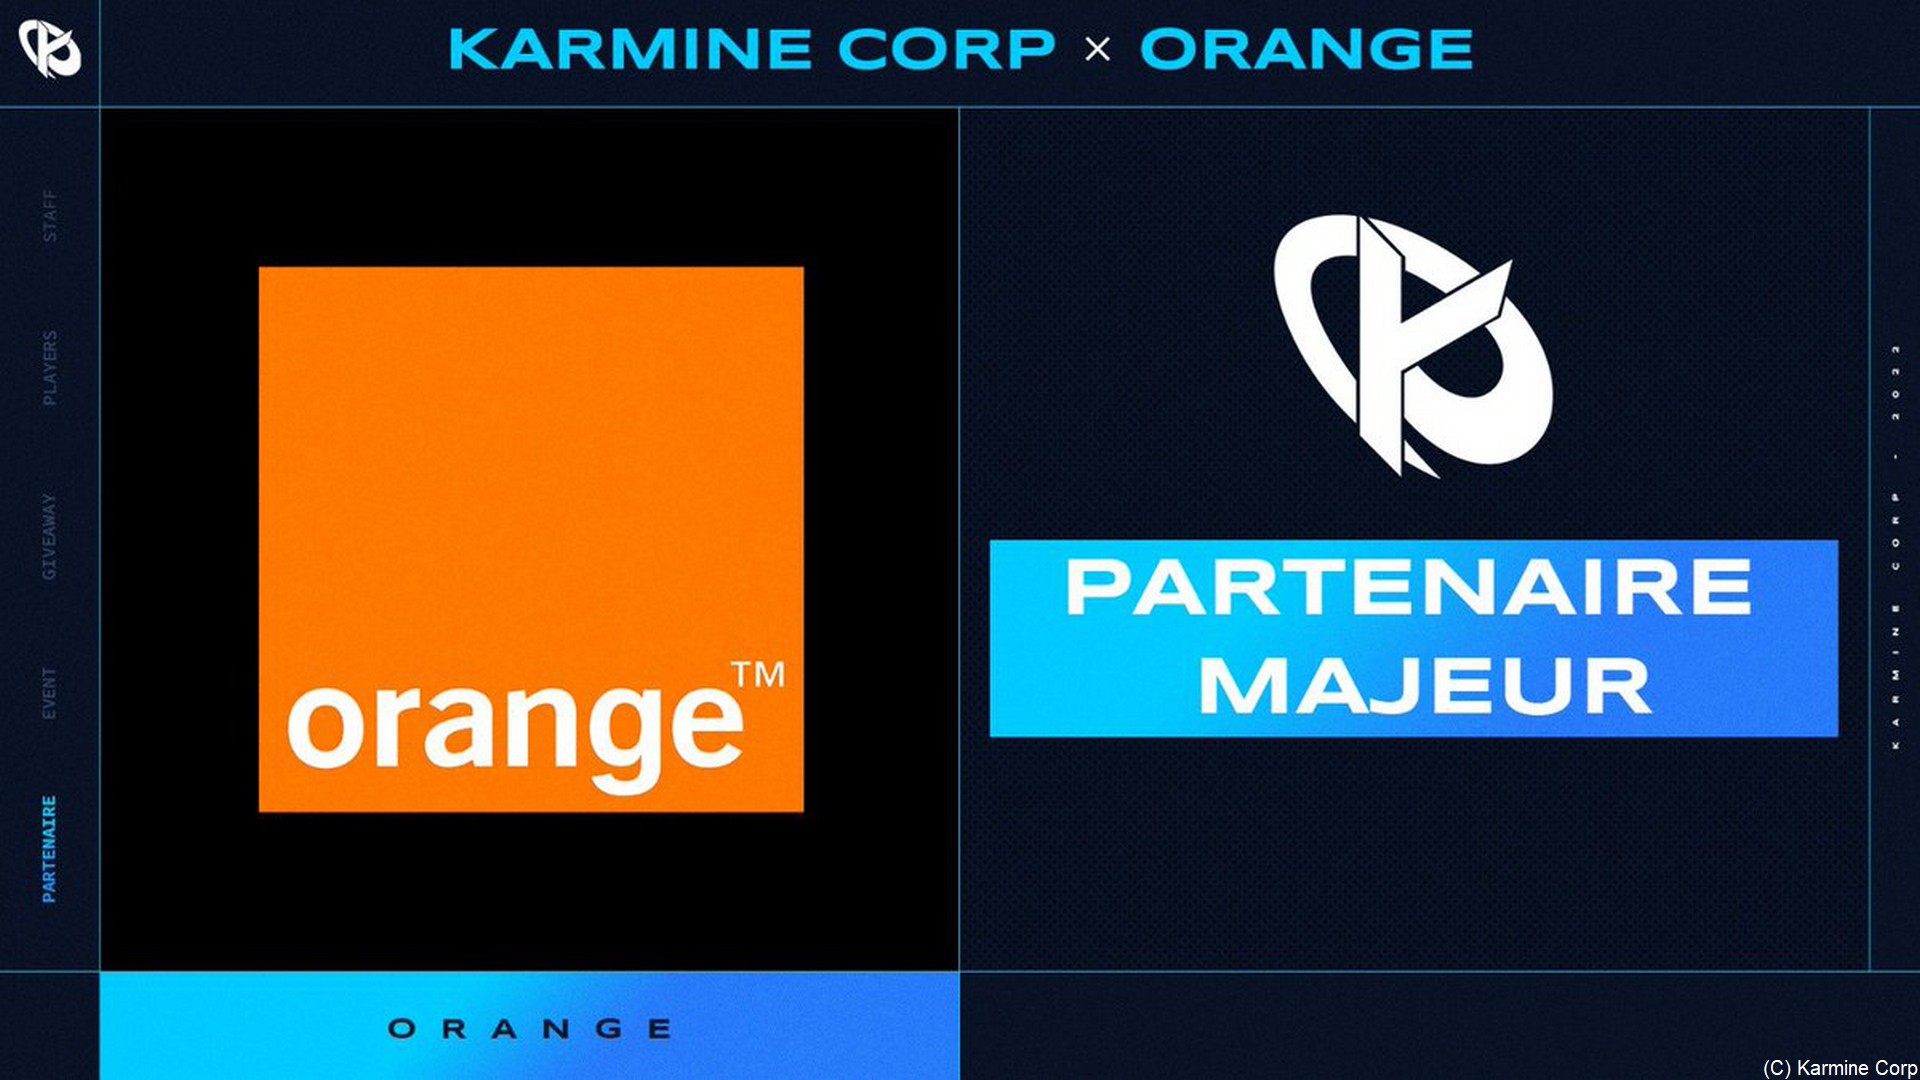 Karmine Corp Orange